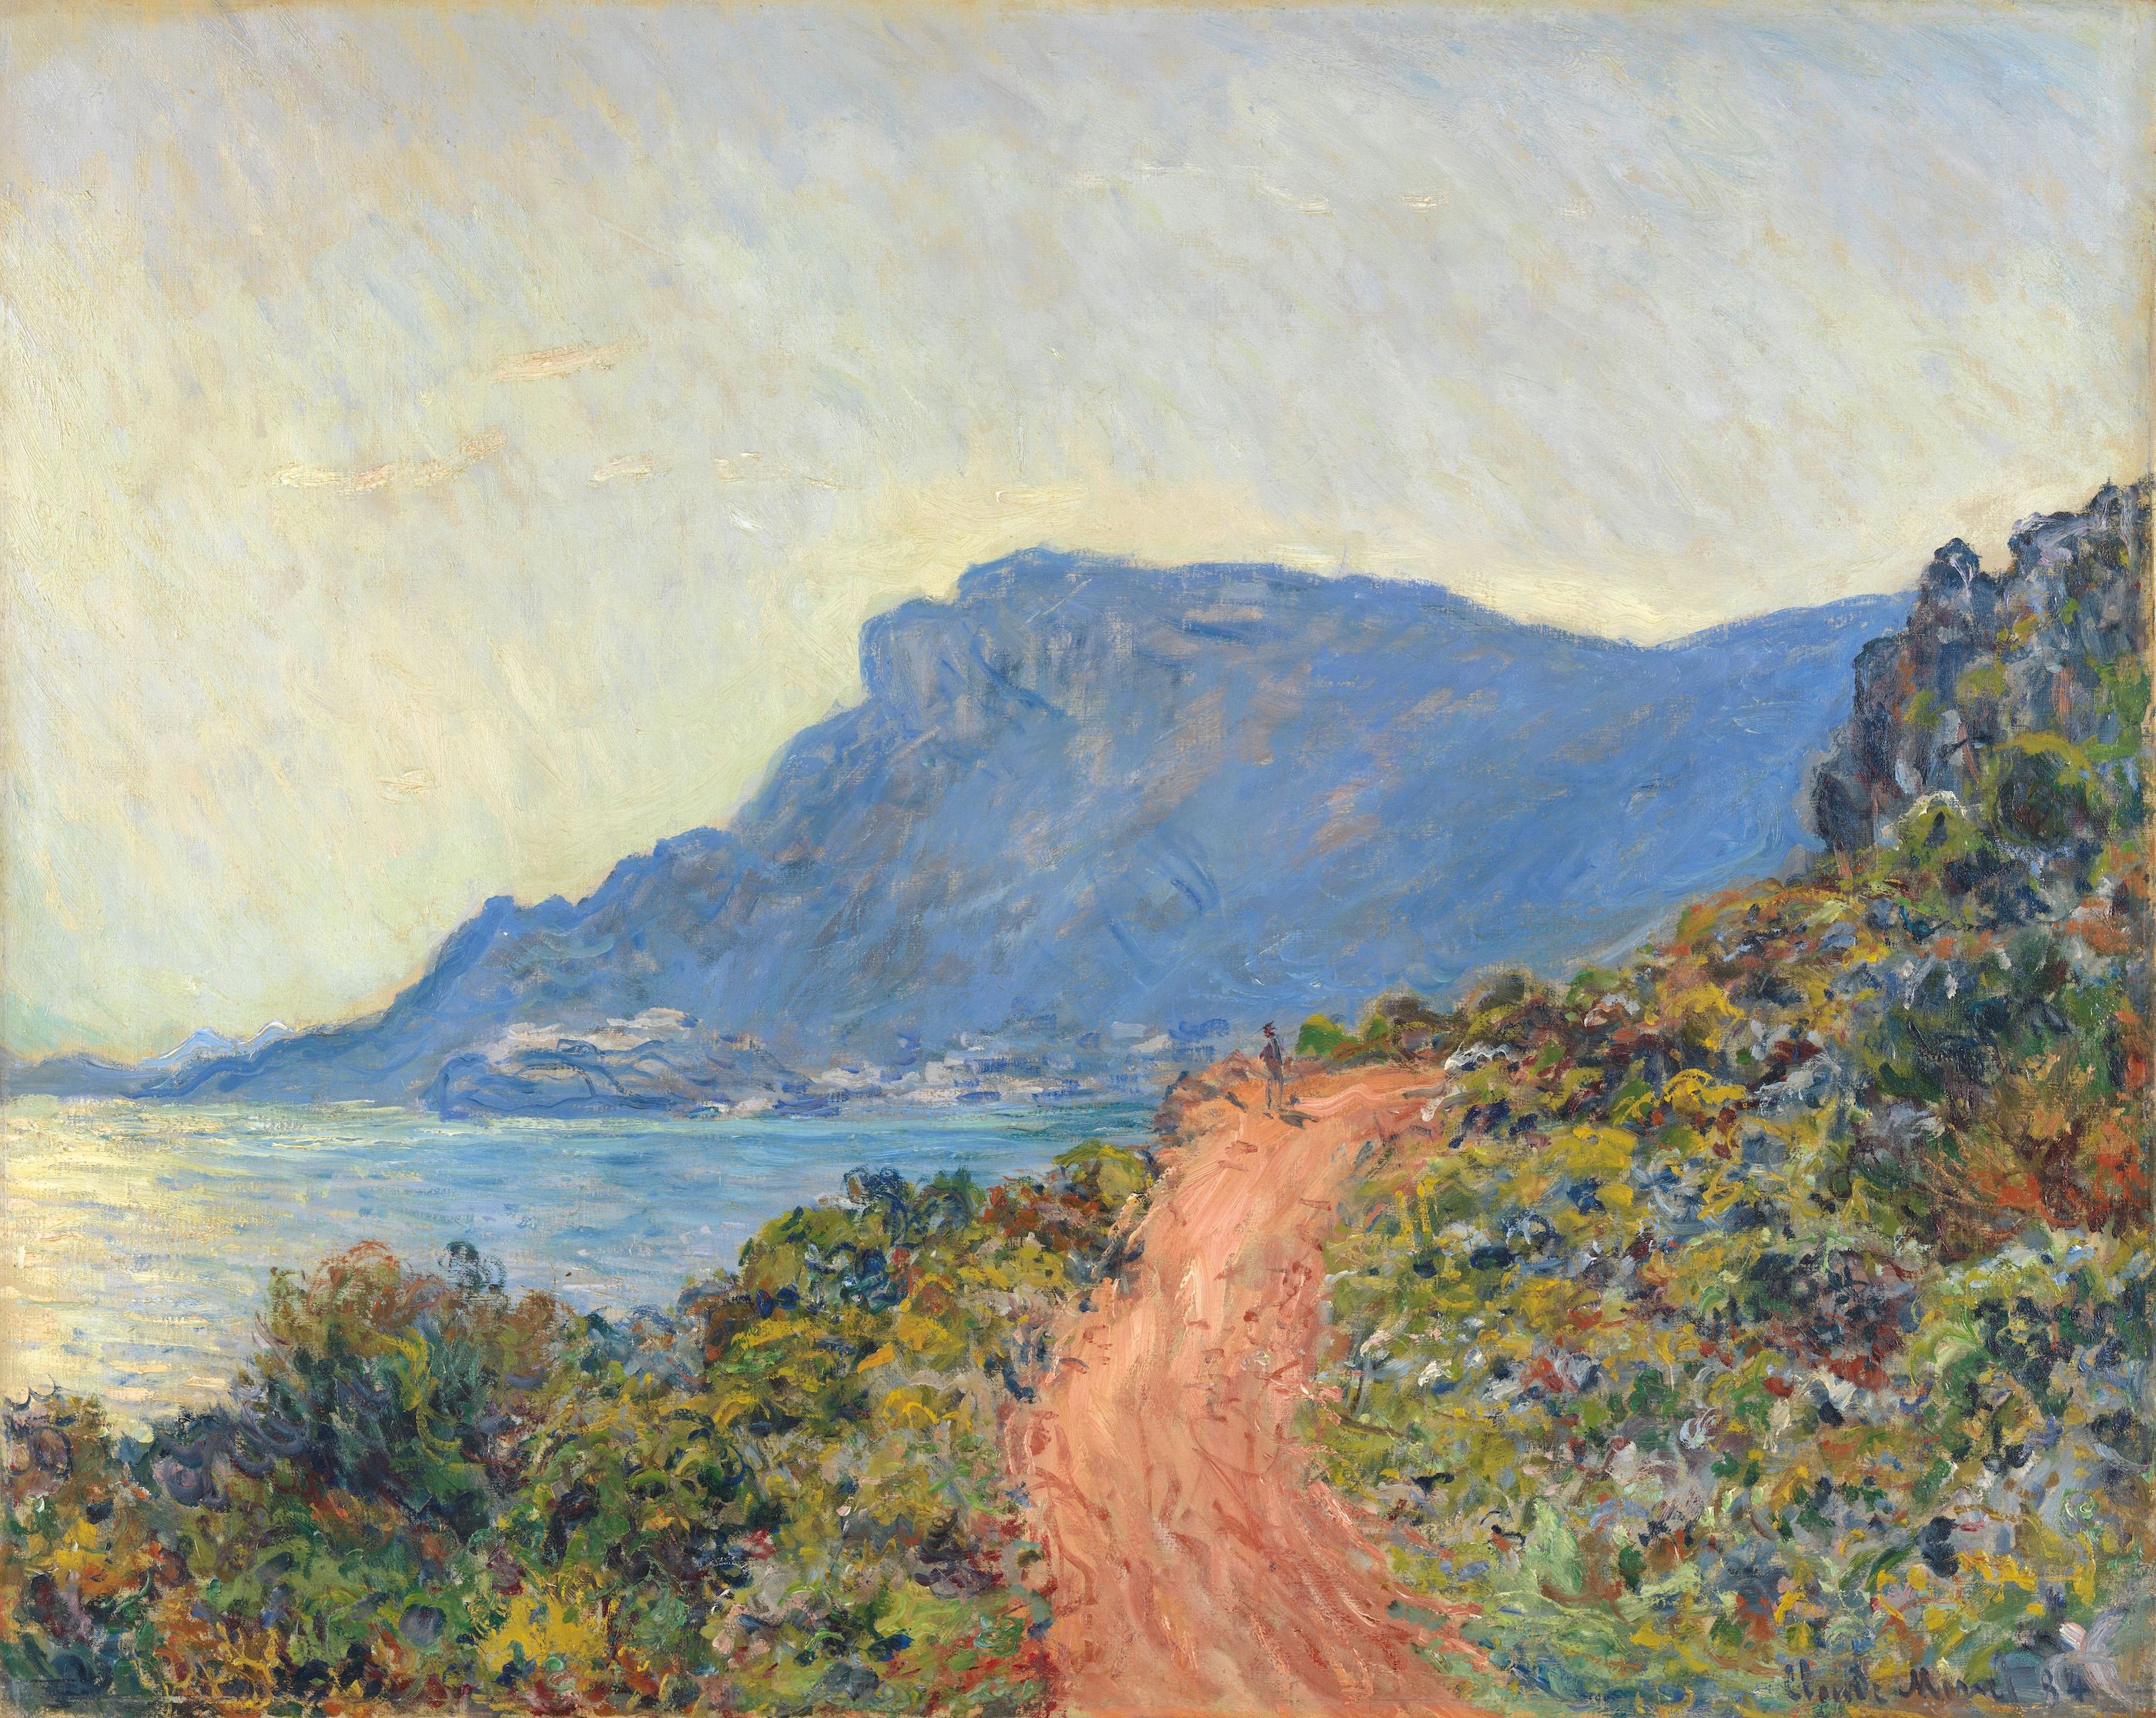 La Corniche bei Monaco by Claude Monet - 1884 - 75 × 94 cm Rijksmuseum